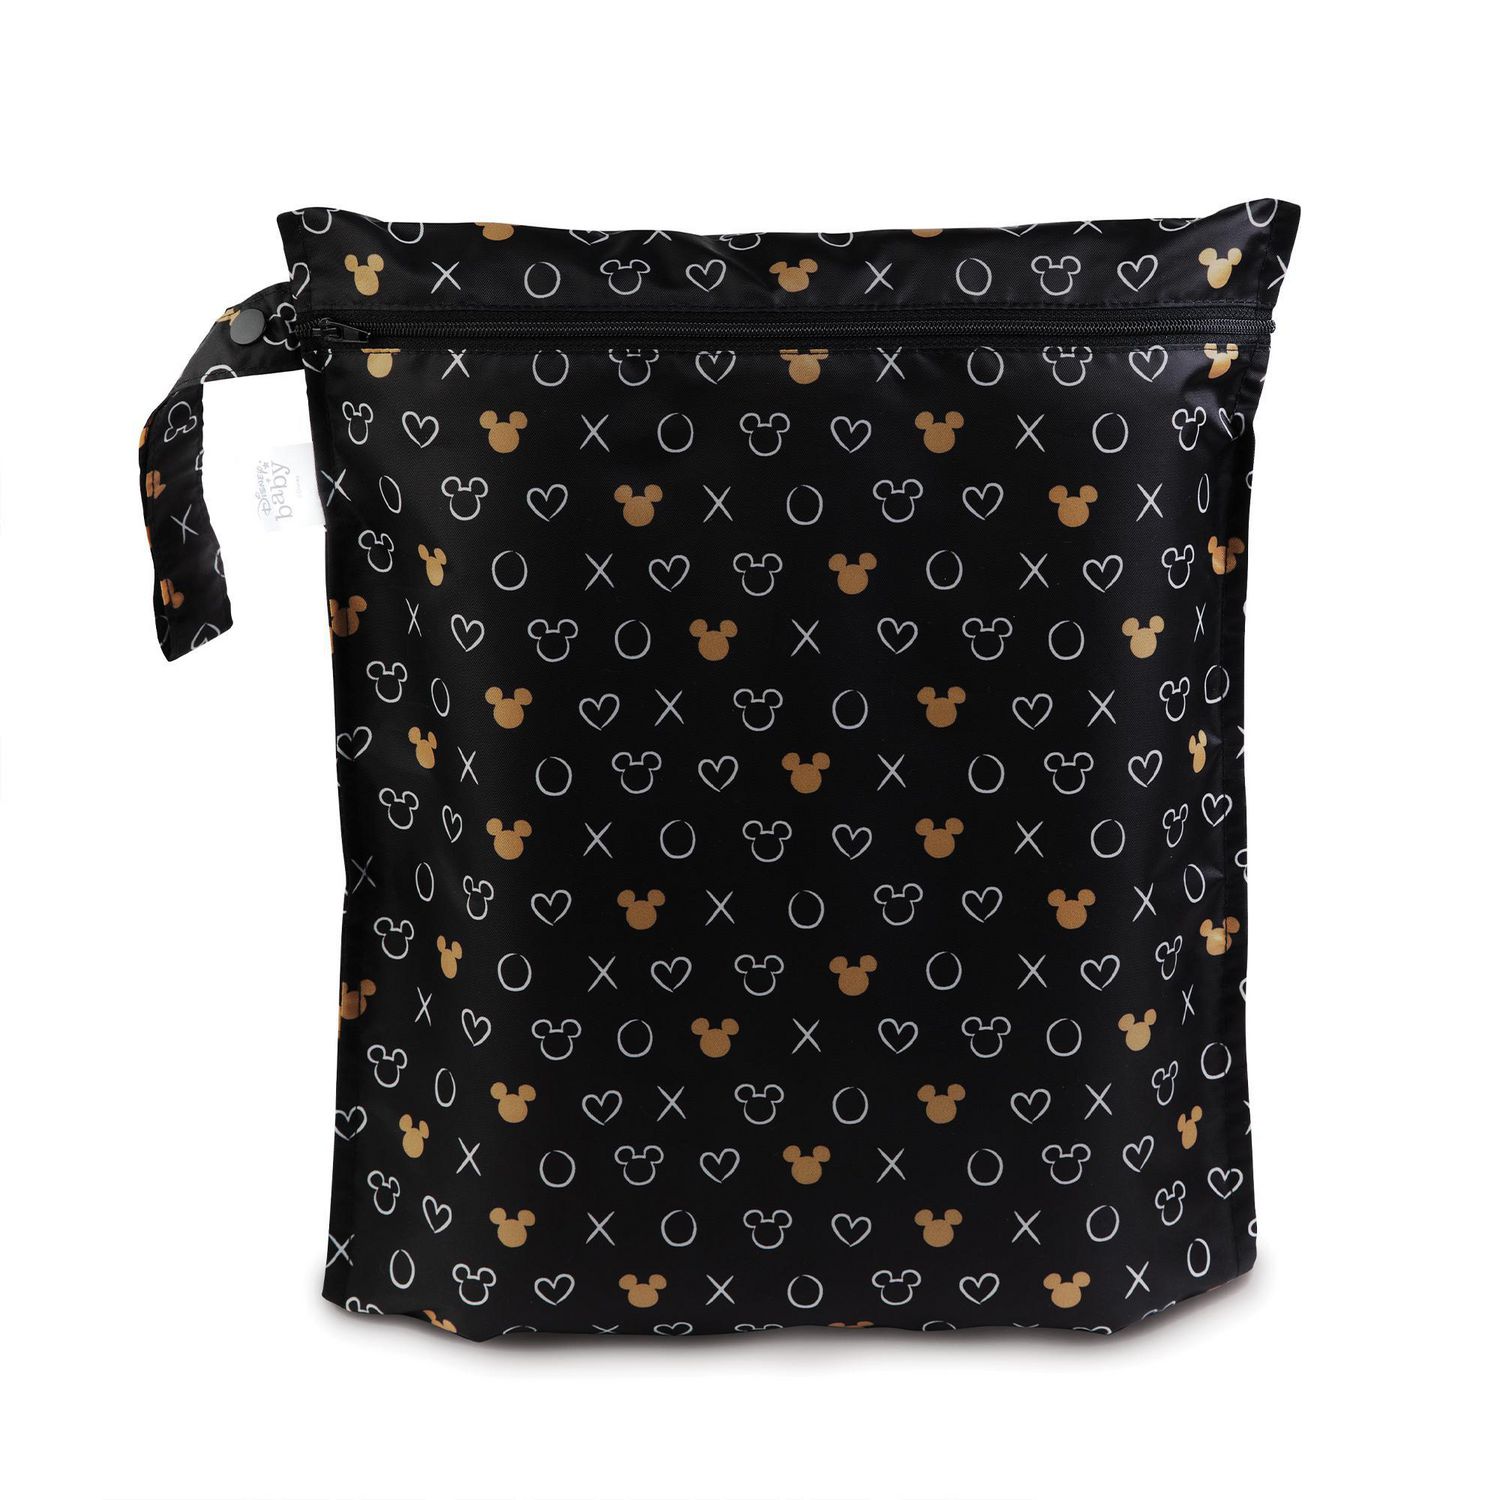 Baby Gift Travel Wet Bag- Summer Pineapple-Optional Strap Available- Bikini Bag Cloth Diaper Menstrual Care Bag